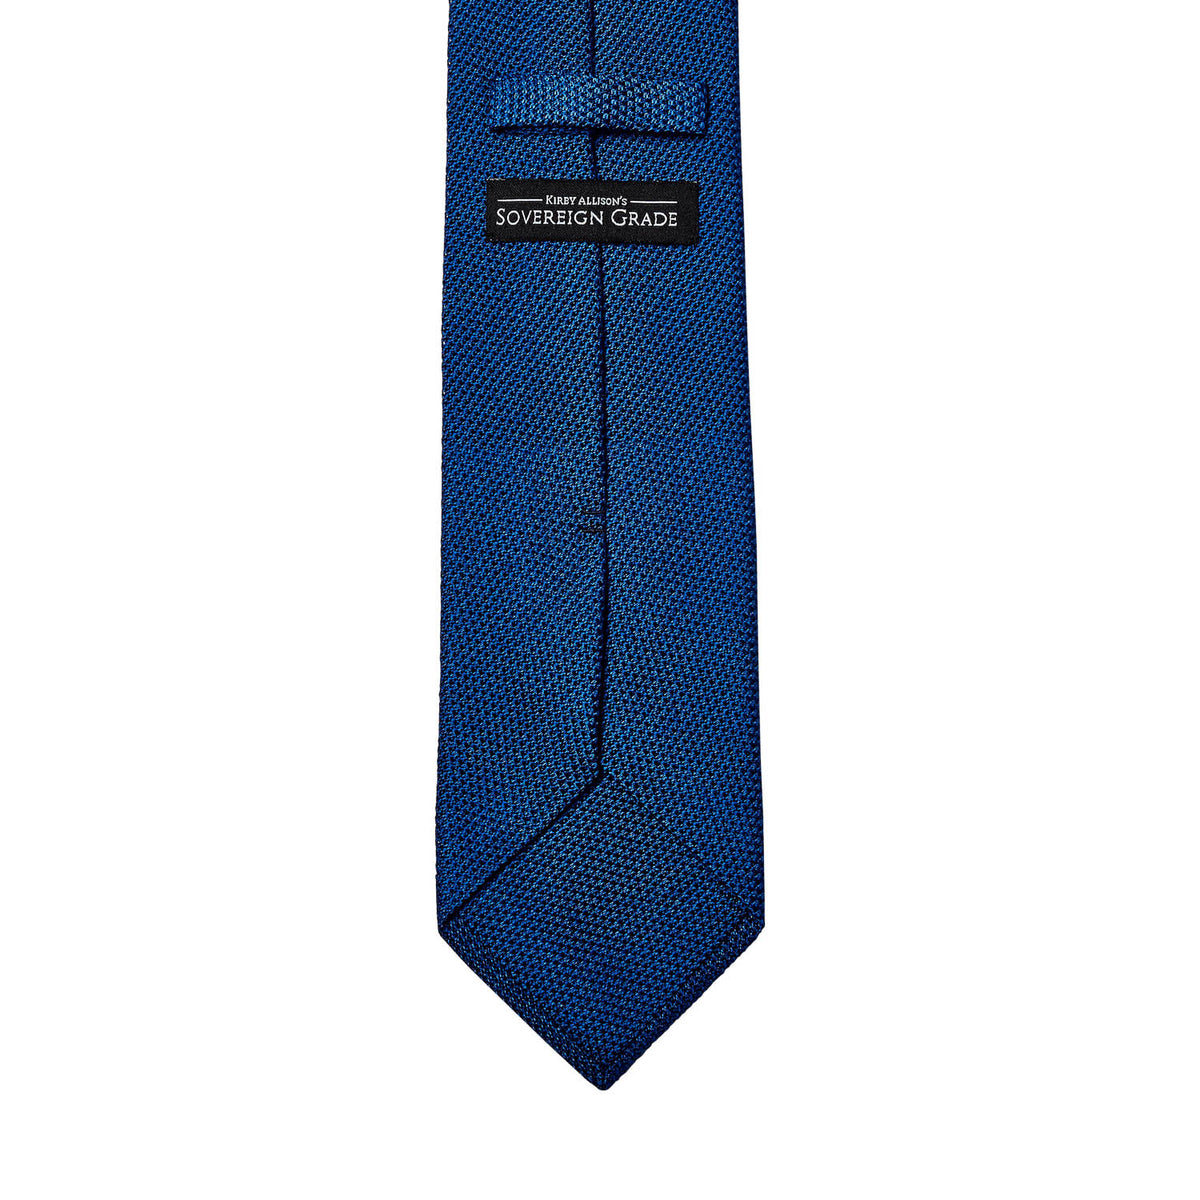 A KirbyAllison.com Sovereign Grade Grenadine Fina Bright Blue Tie on a white background.